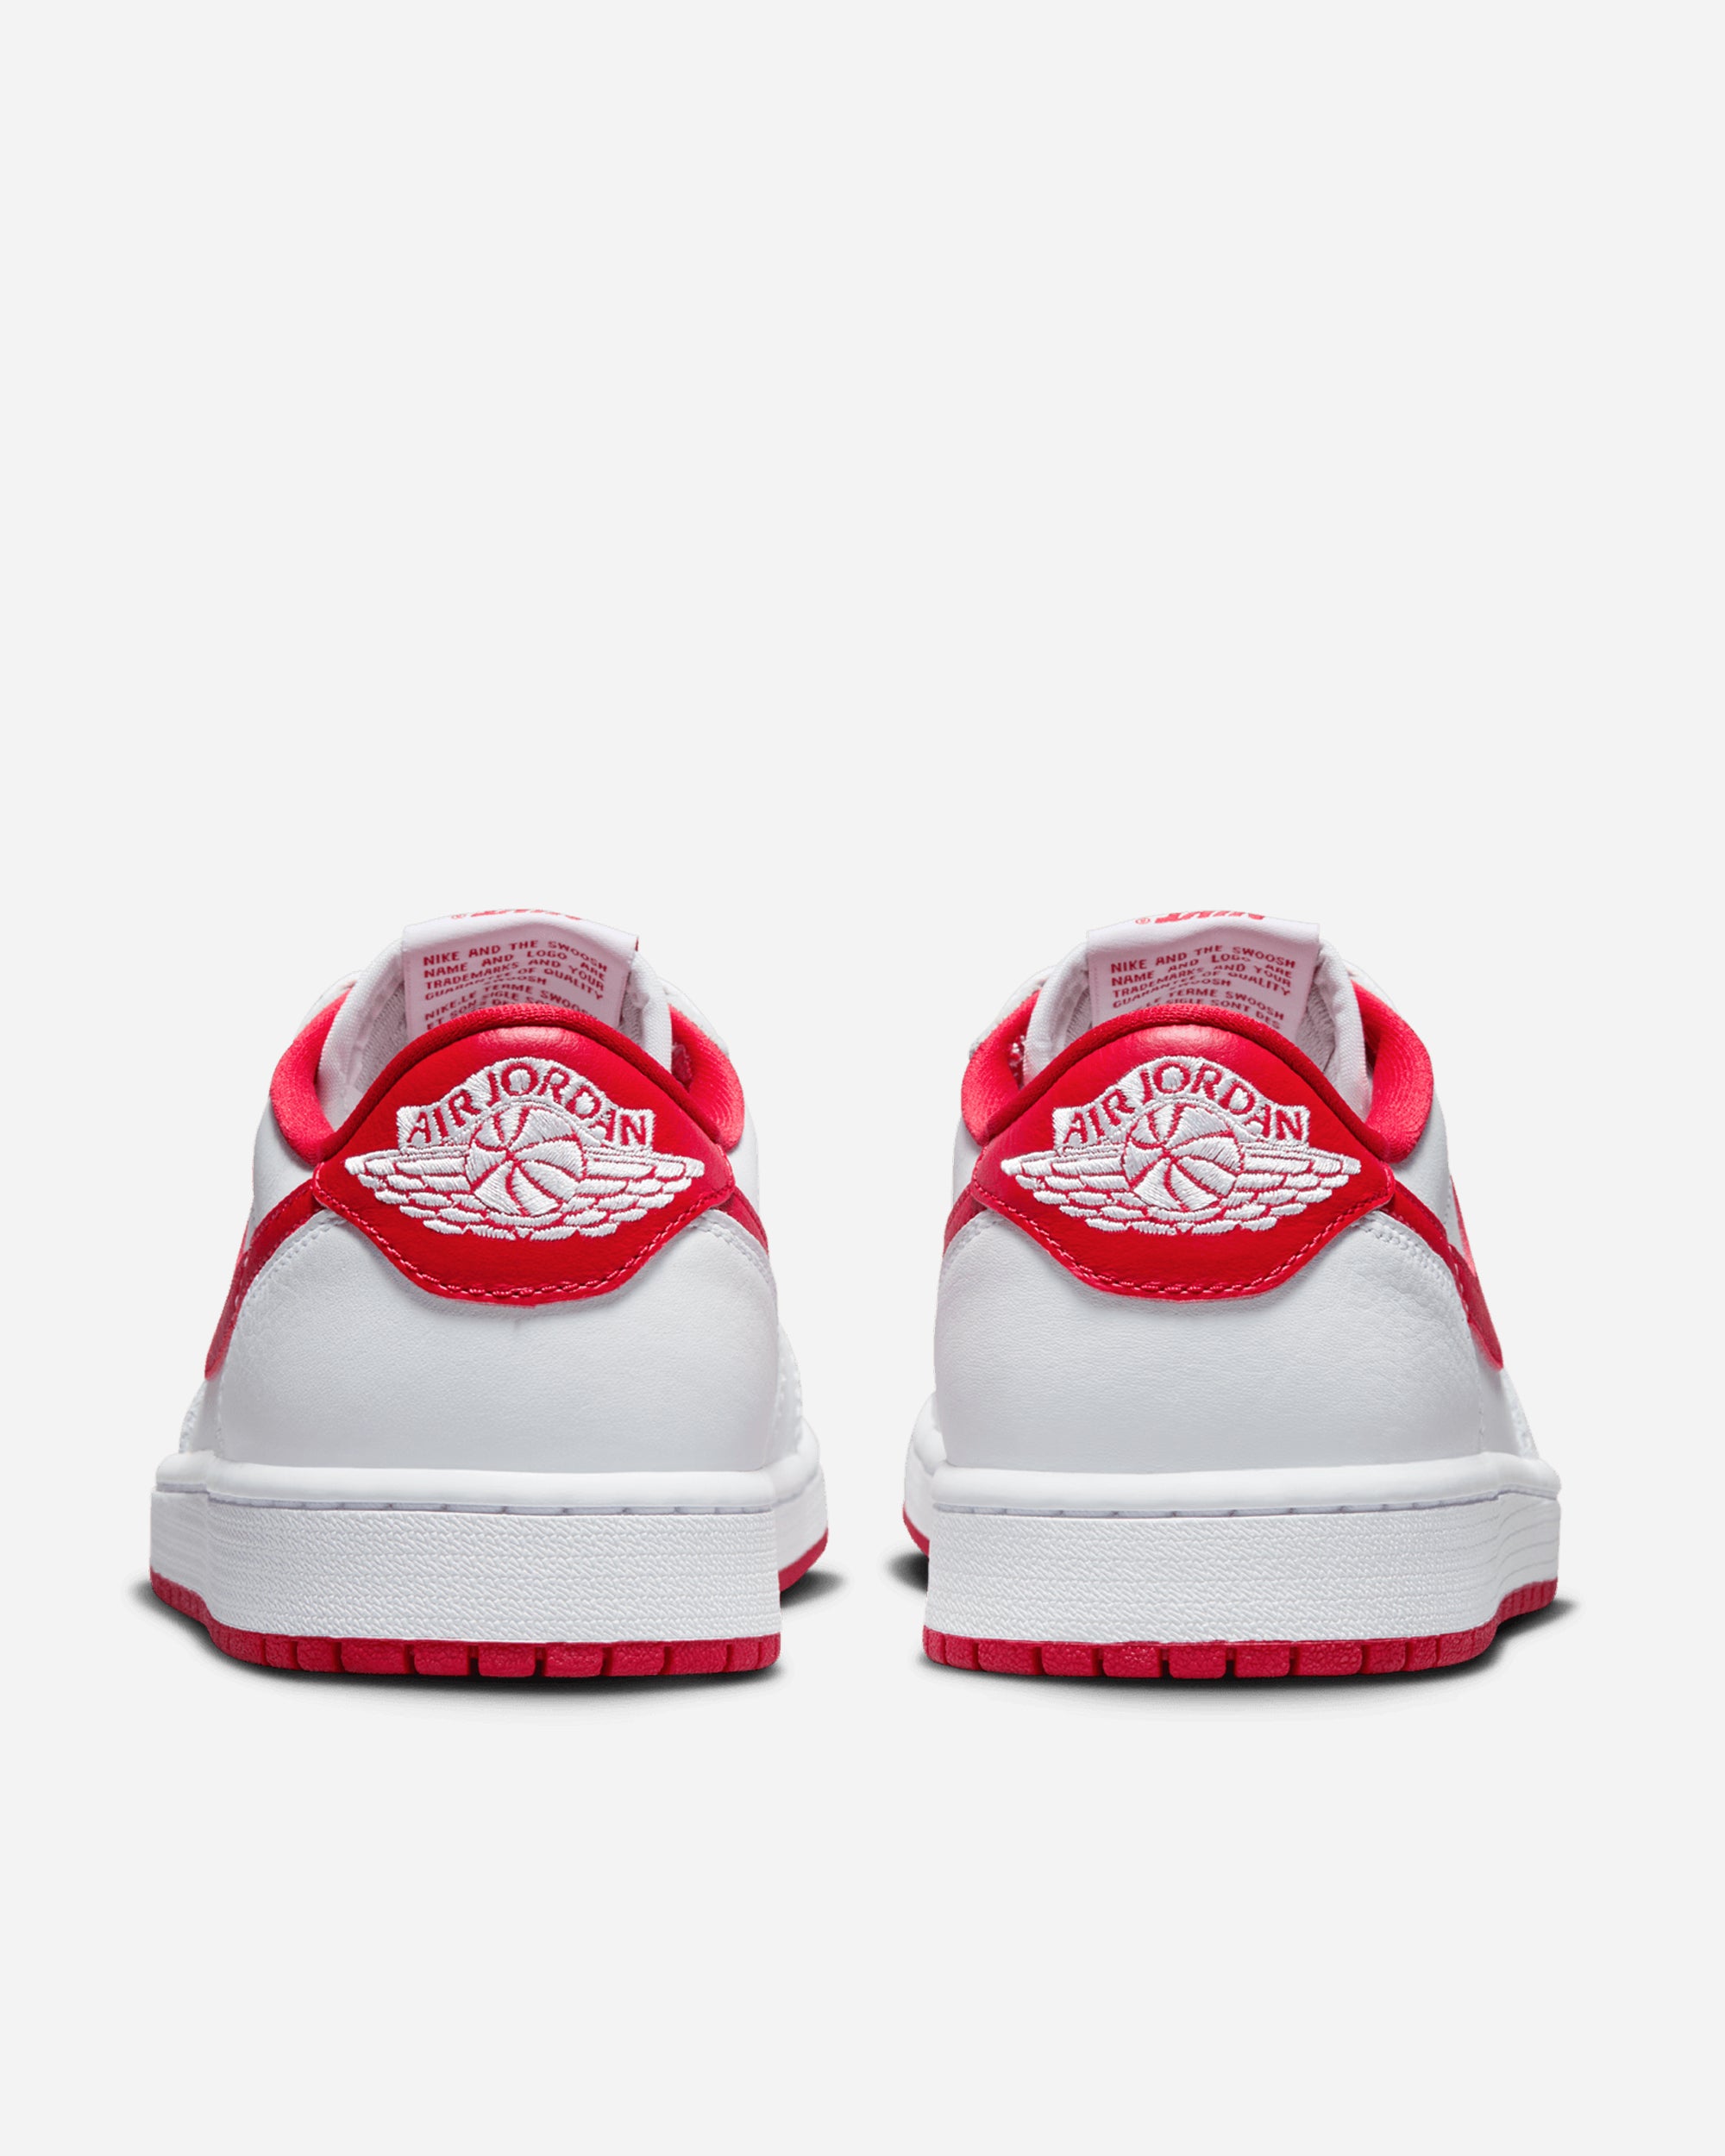 Jordan Brand Air Jordan 1 Retro Low 'University Red' WHITE/UNIVERSITY RED-WHITE CZ0790-161